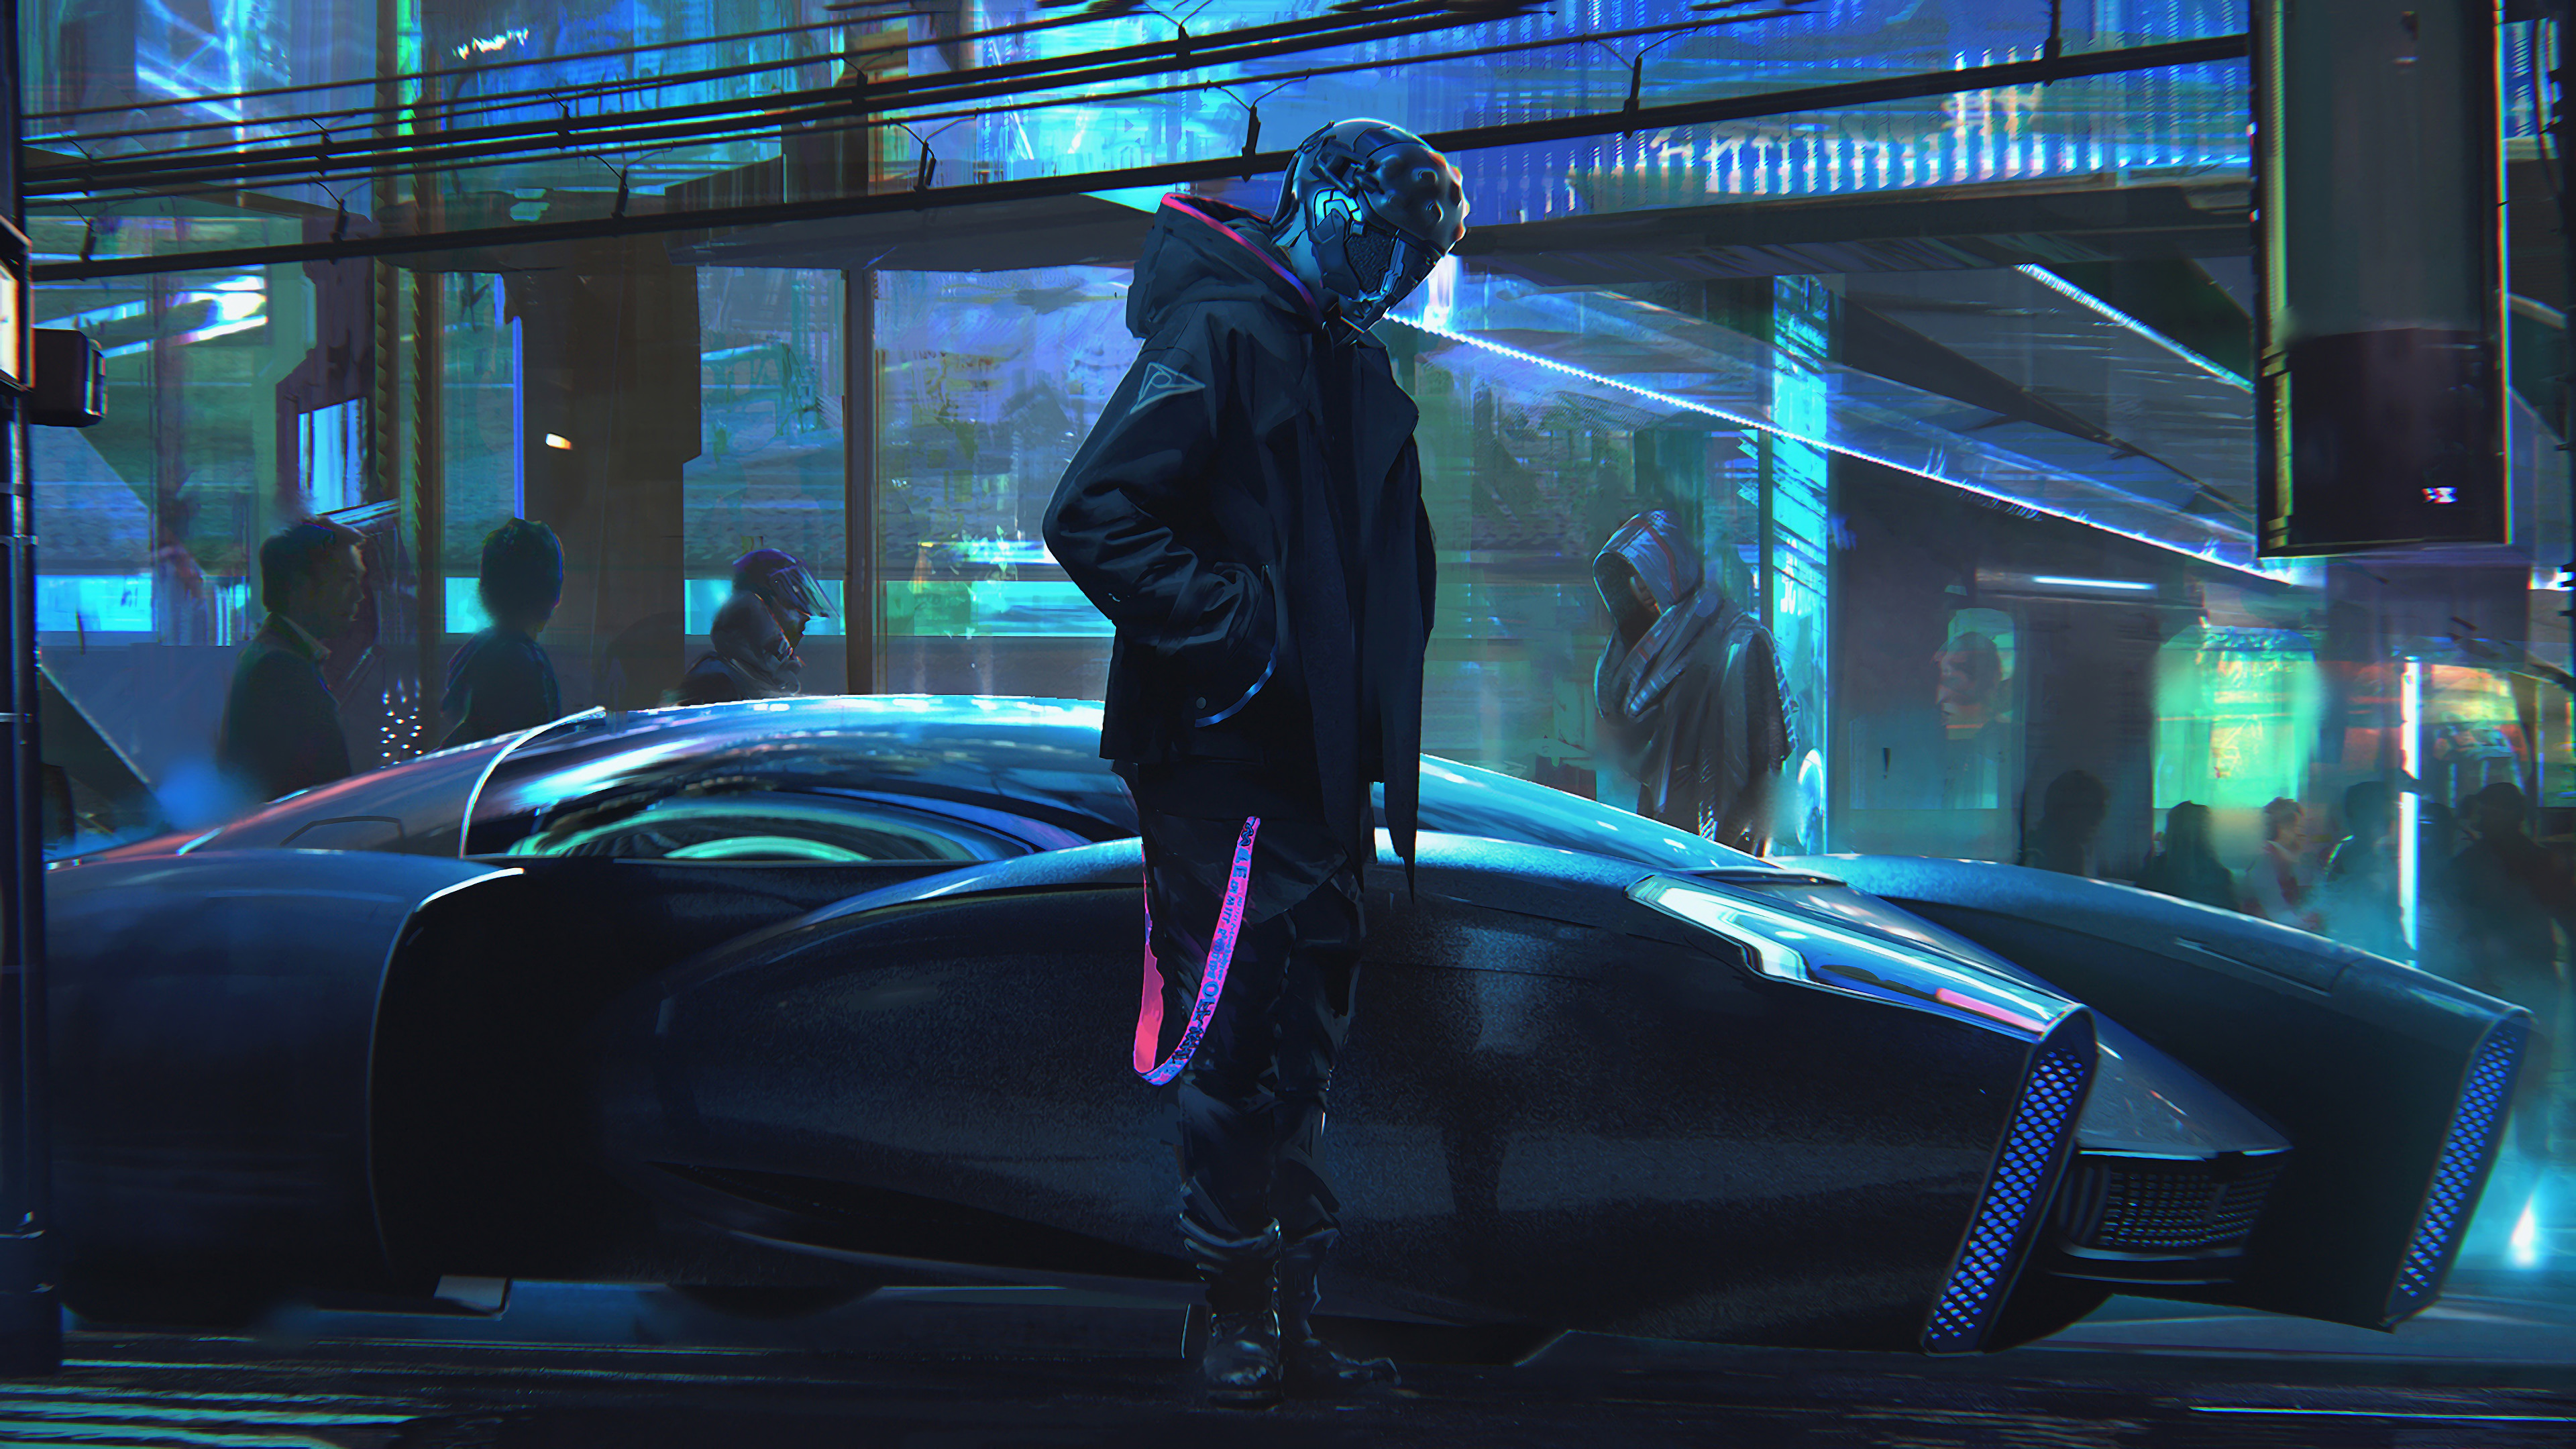 Futuristic cyberpunk cityscape HD wallpaper for desktop background.